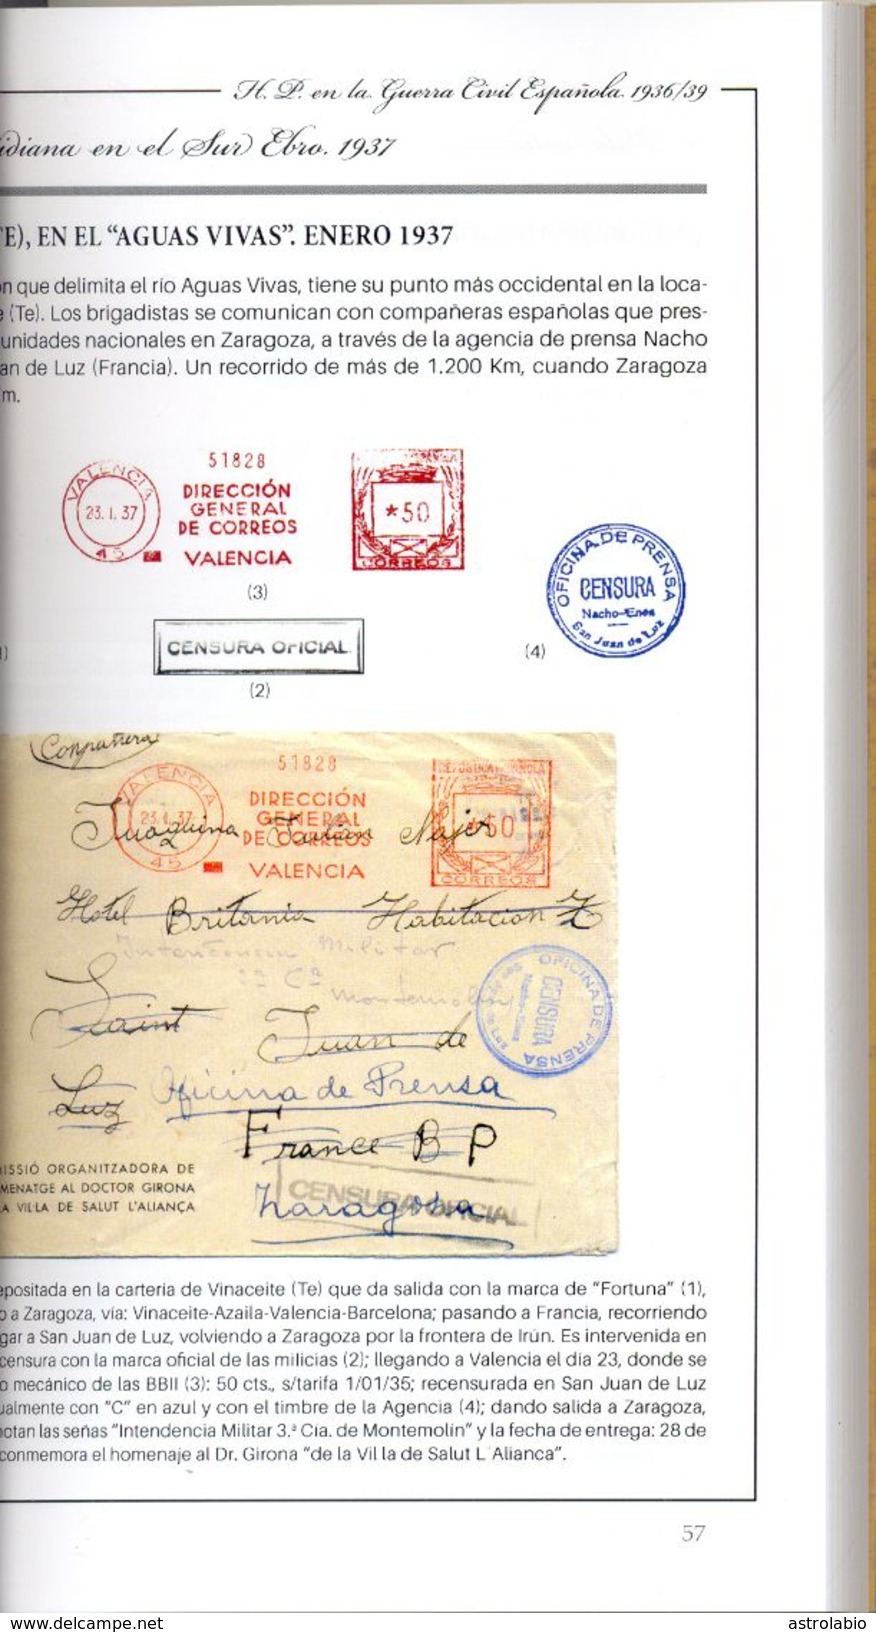 Historia Postal En La Guerra Civil Española Vol II - Teruel 1936-39  Ver 7 Scan - Poste Militaire & Histoire Postale